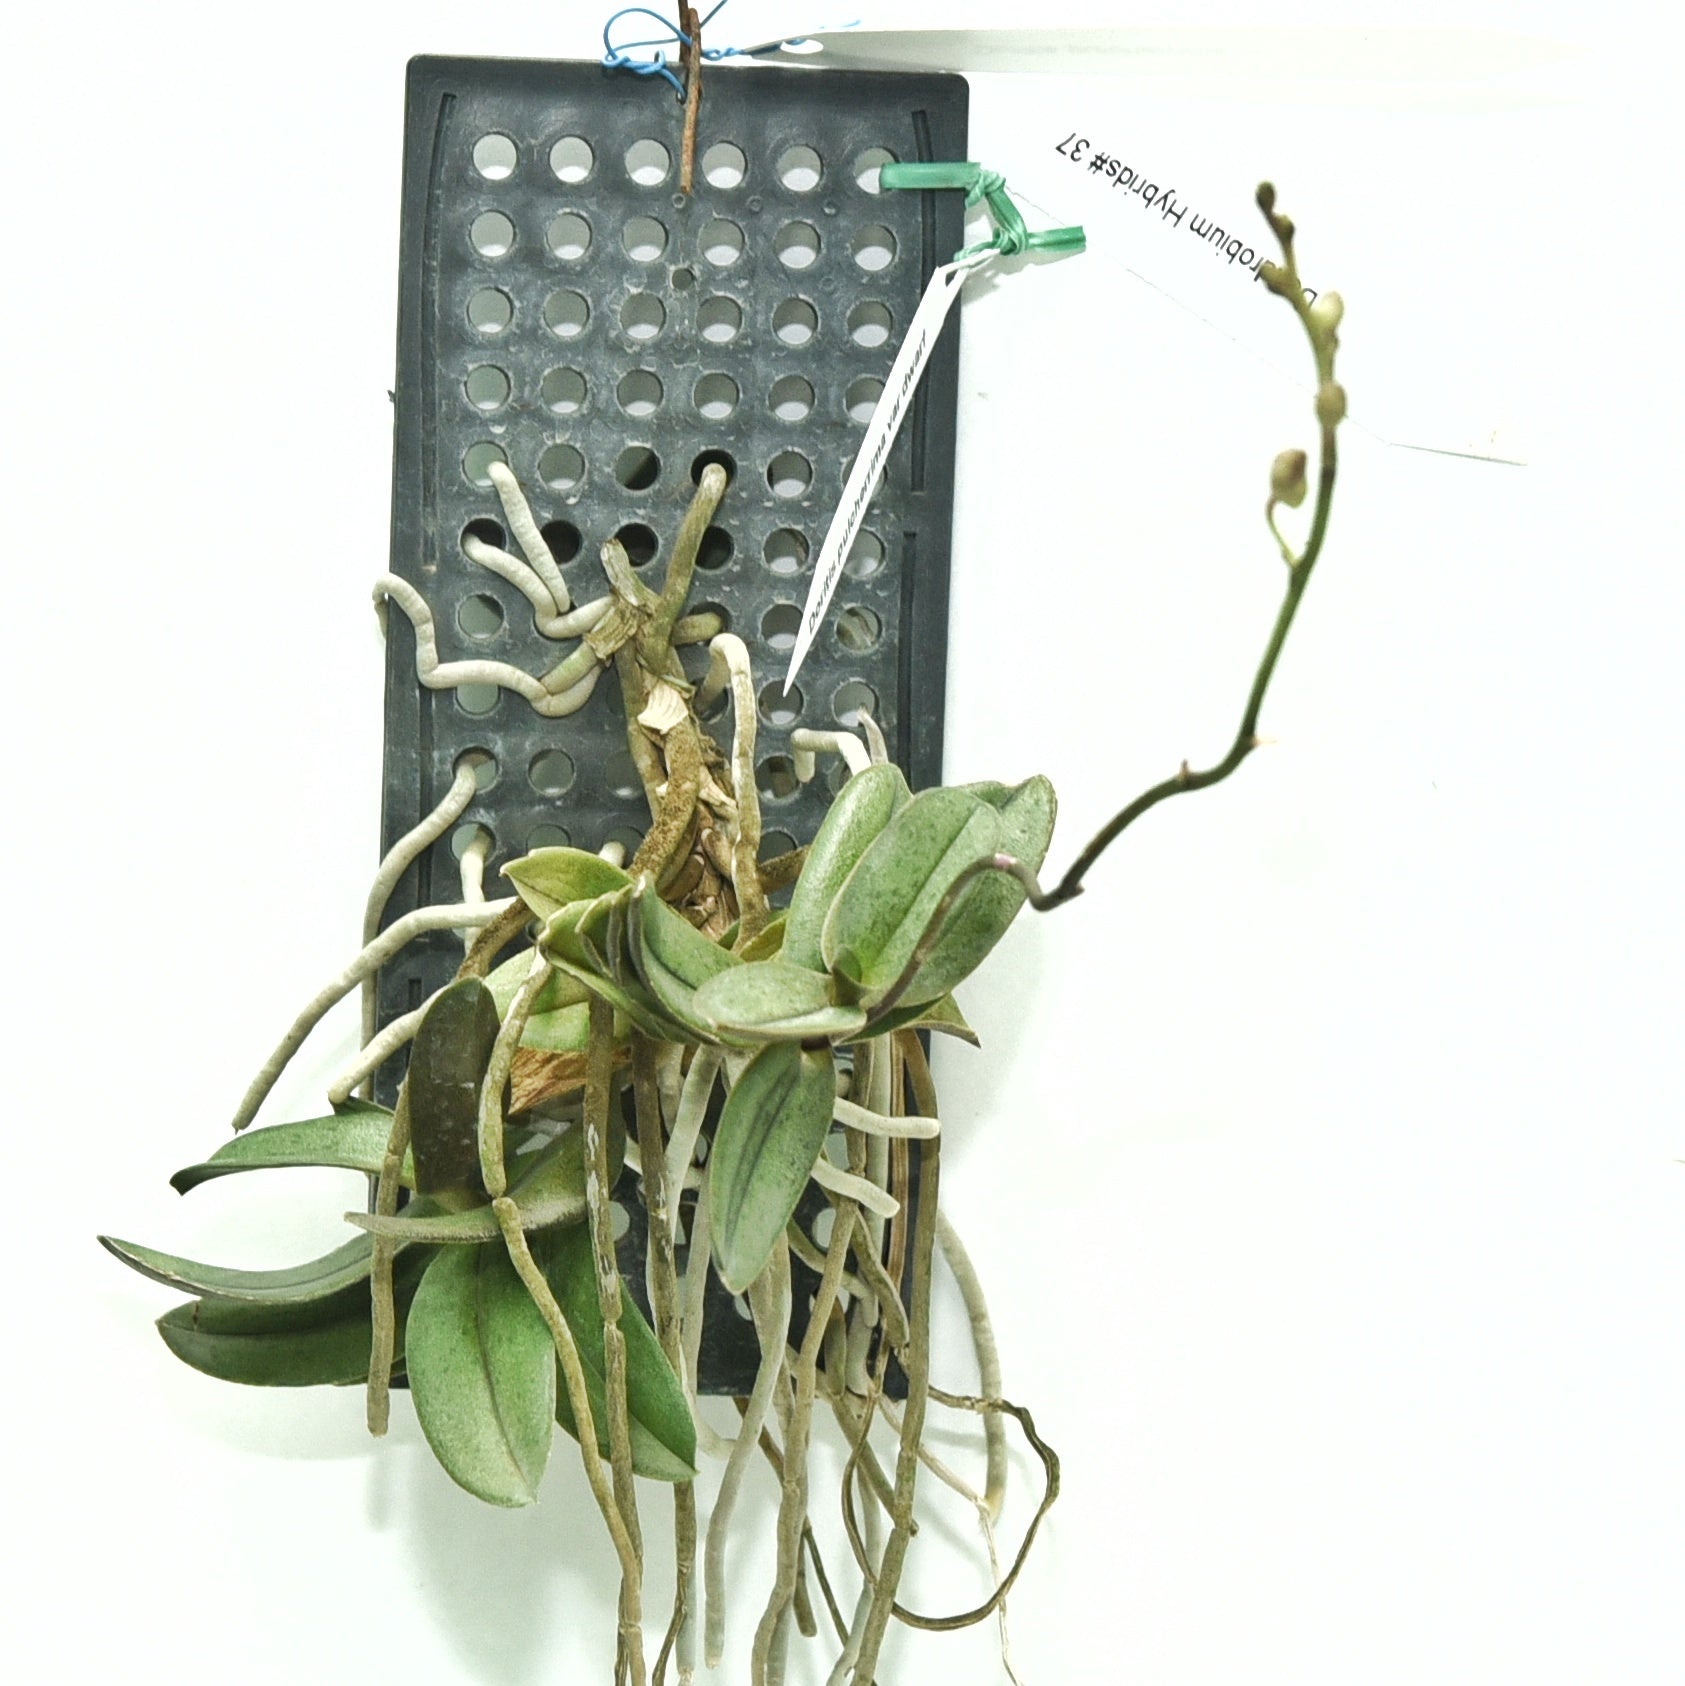 Doritis Pulcherrima(Phalaenopsis Pulcherrima)